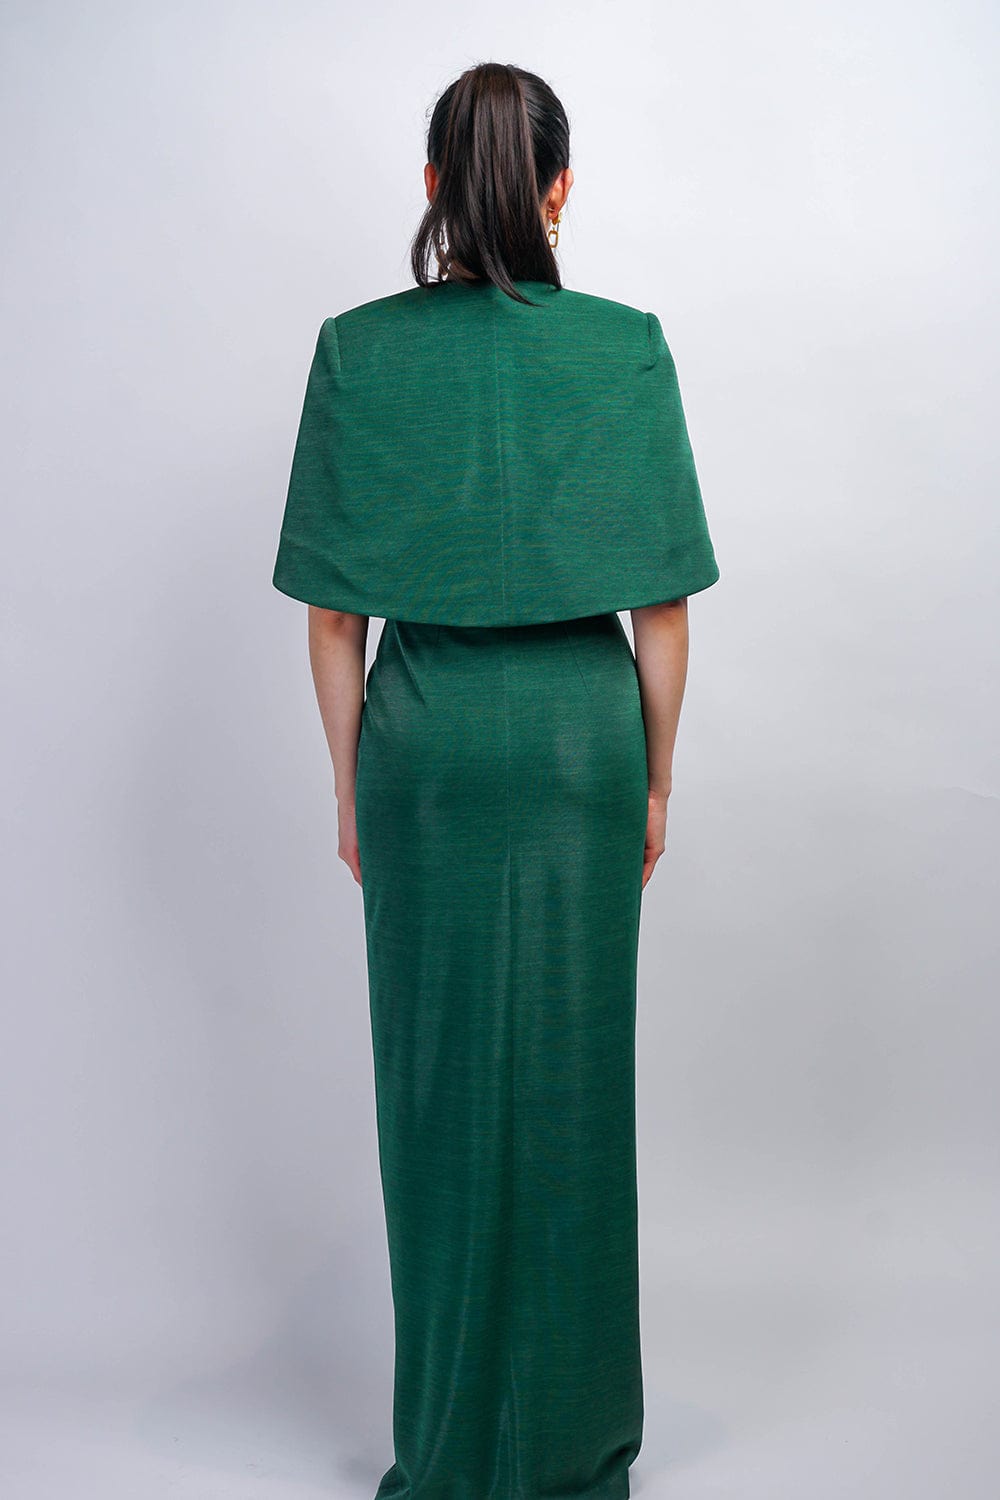 Chloe Dao JACKETS Green Luxe Sheen Short Cape Jacket